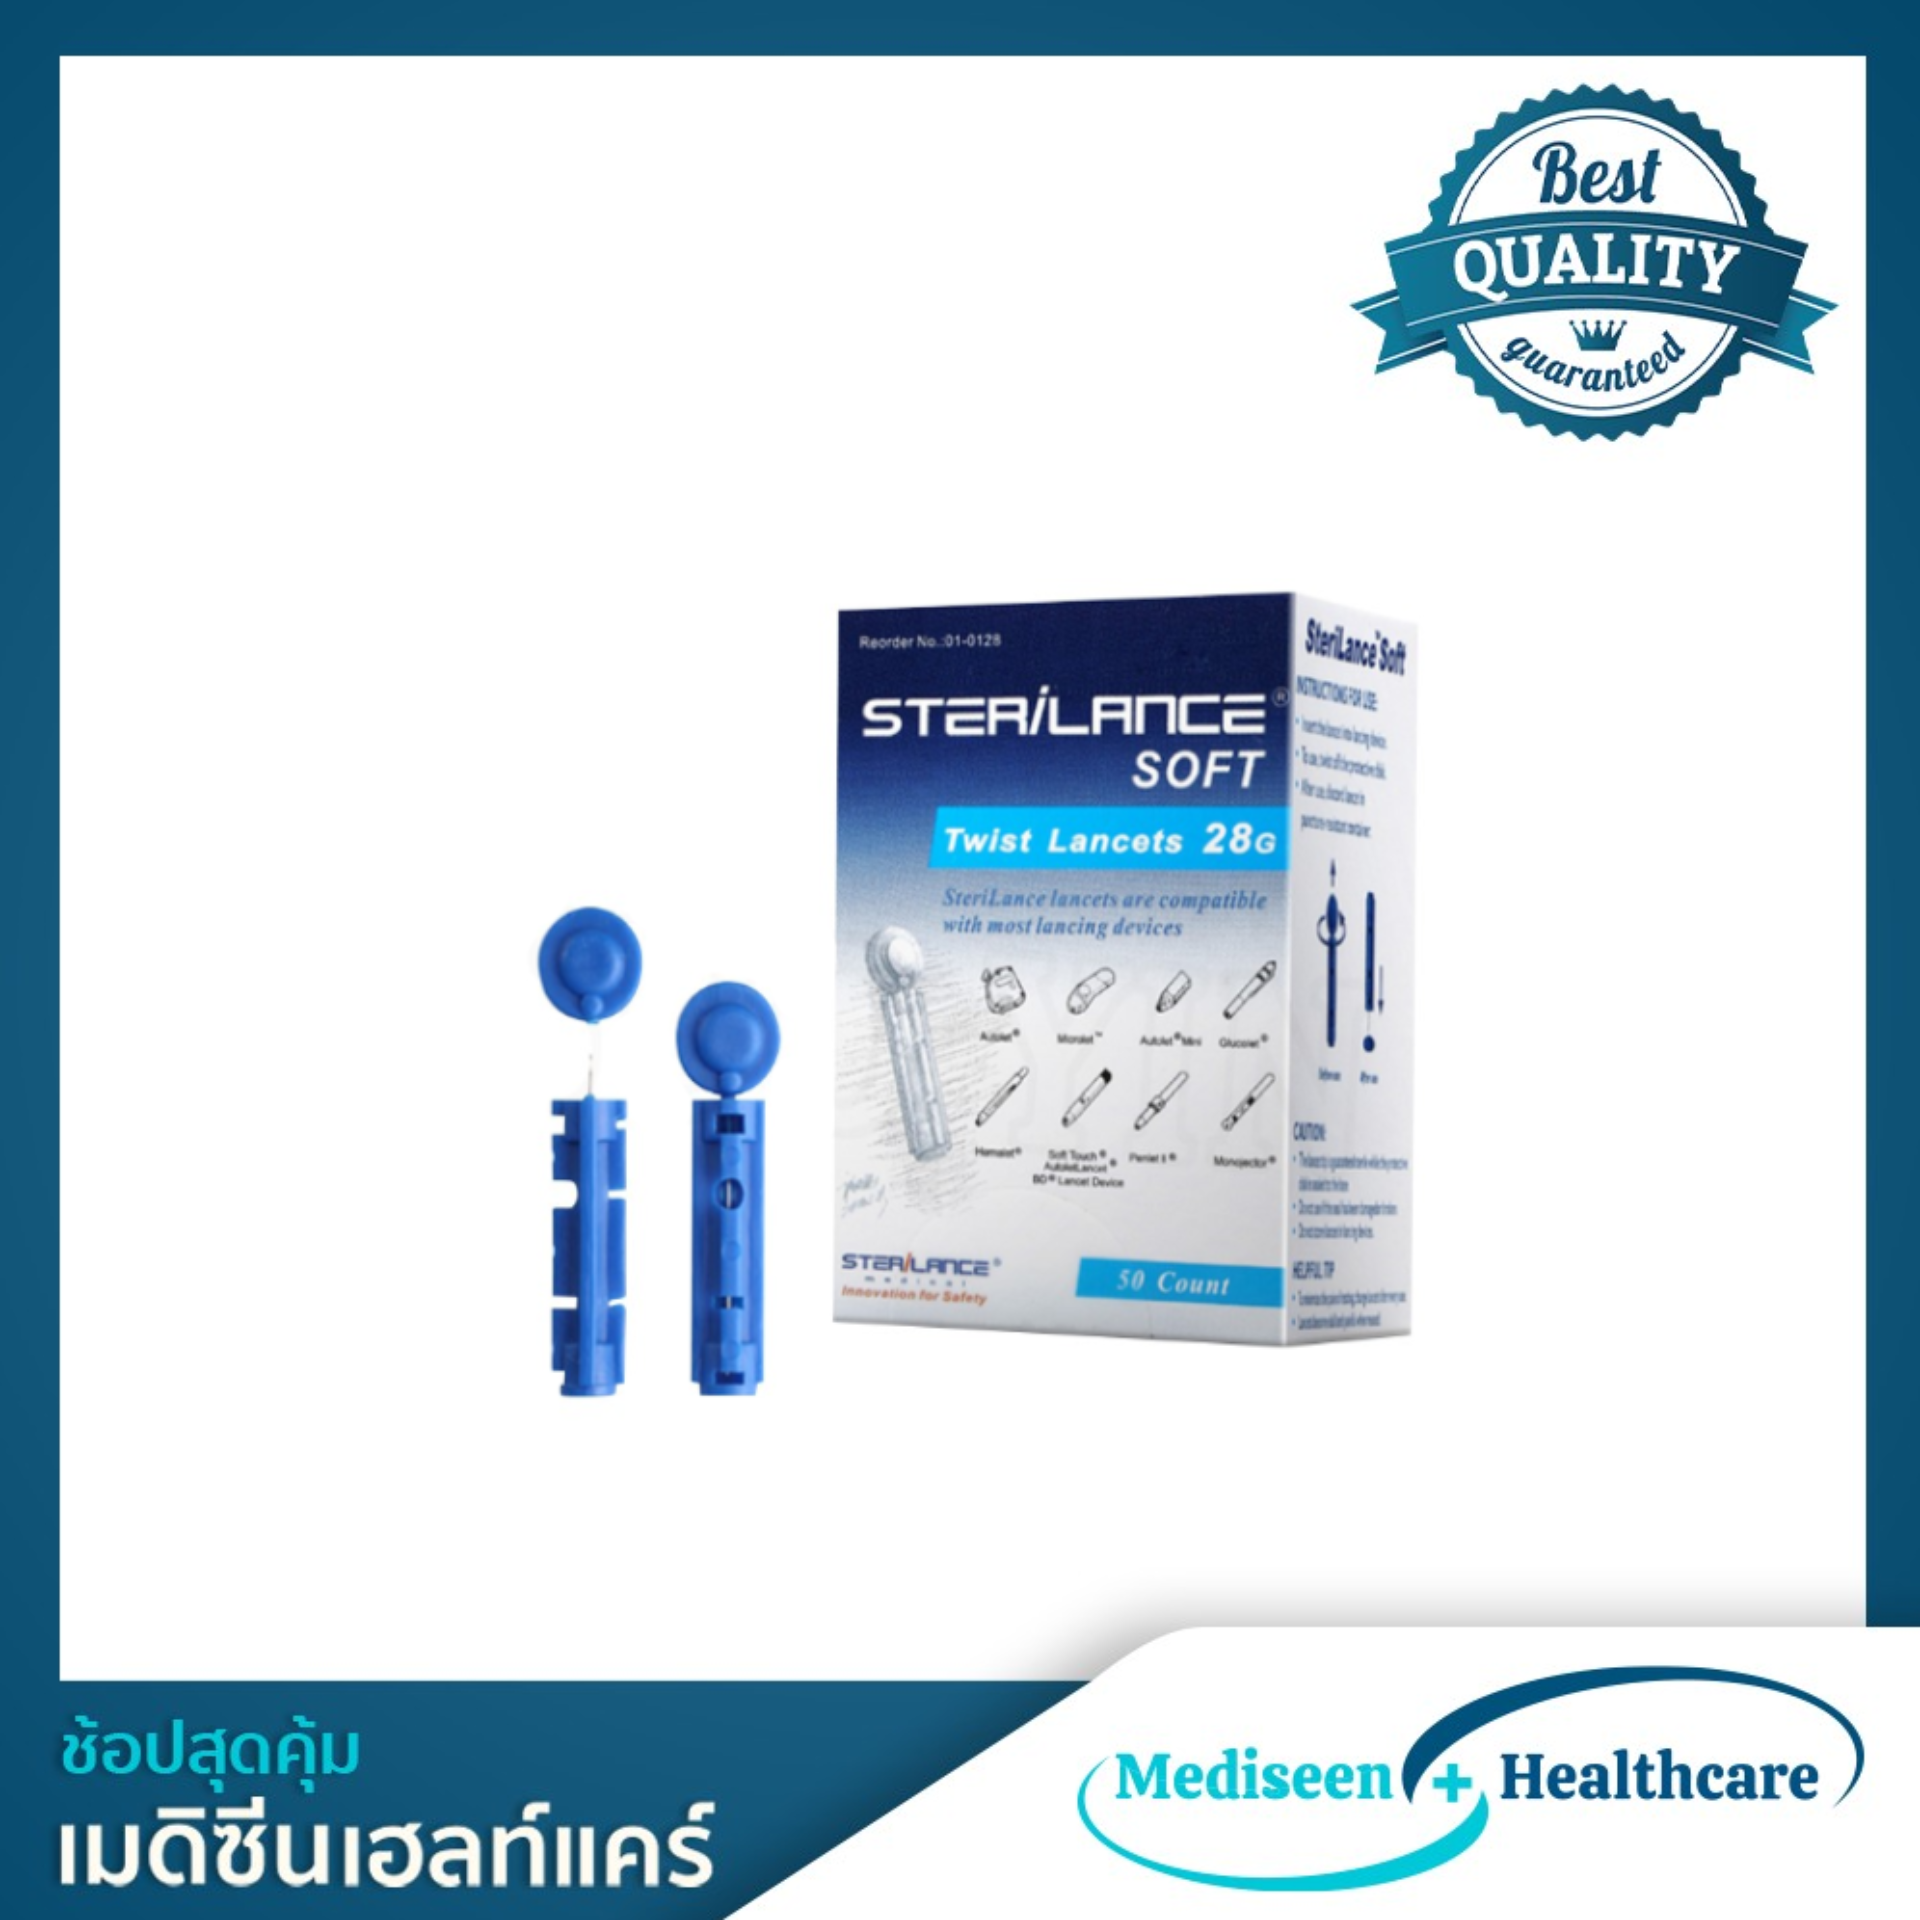 SteriLance Soft (Twist Lancets 28G) เข็มเจาะเลือด ใช้กับเครื่องตรวจเบาหวาน Easy Max MU (100/กล่อง)